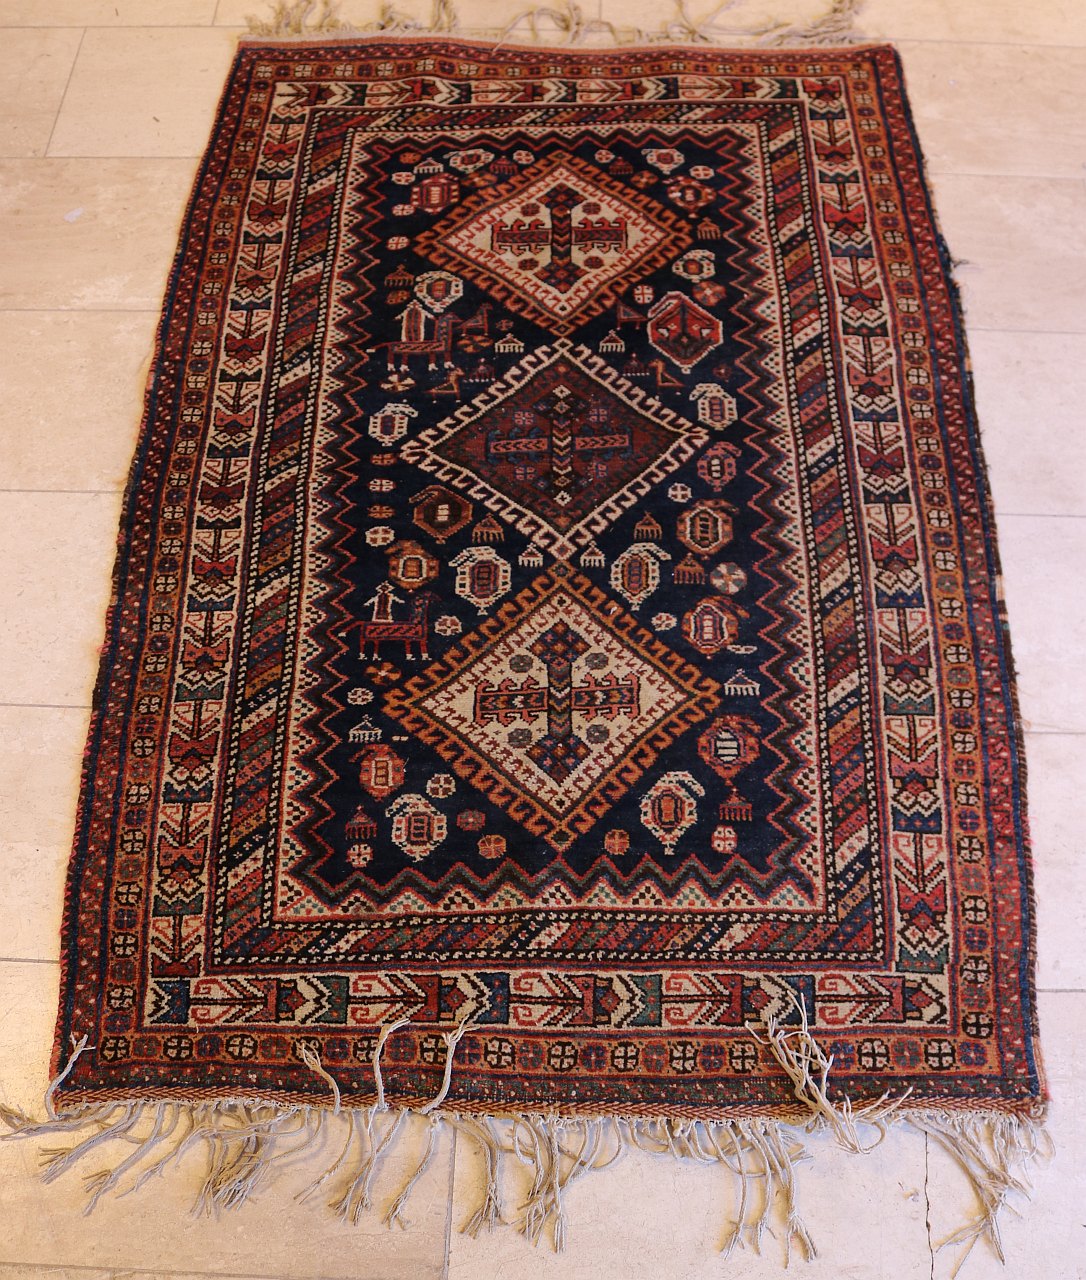 Handgeknoopt Perzisch tapijt, 161 x 110 cm.